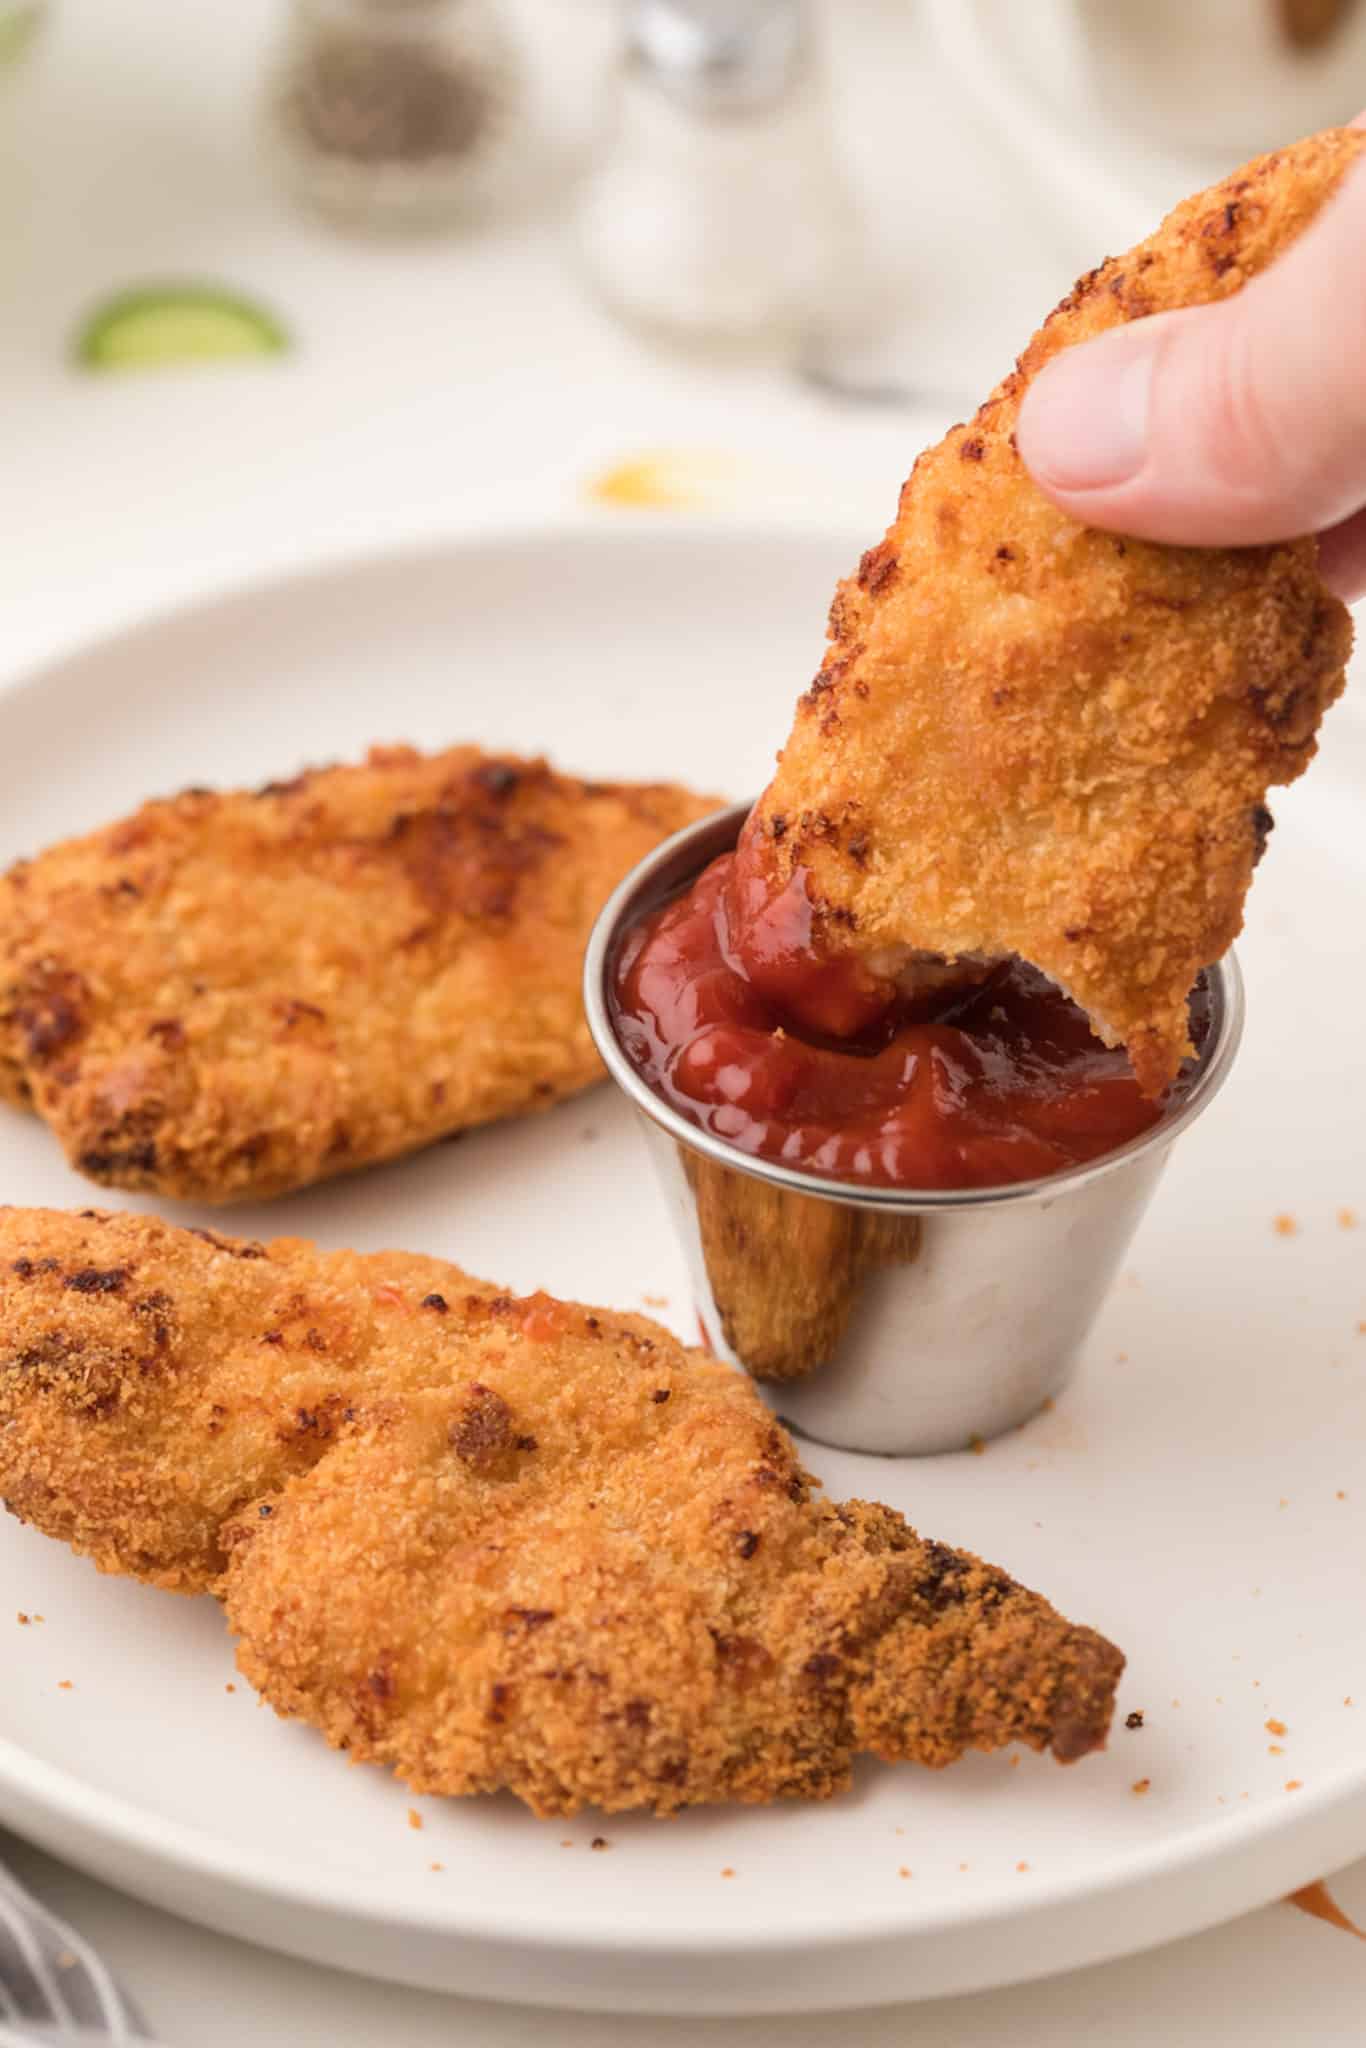 Dipping an air fryer chicken finger in ketchup.